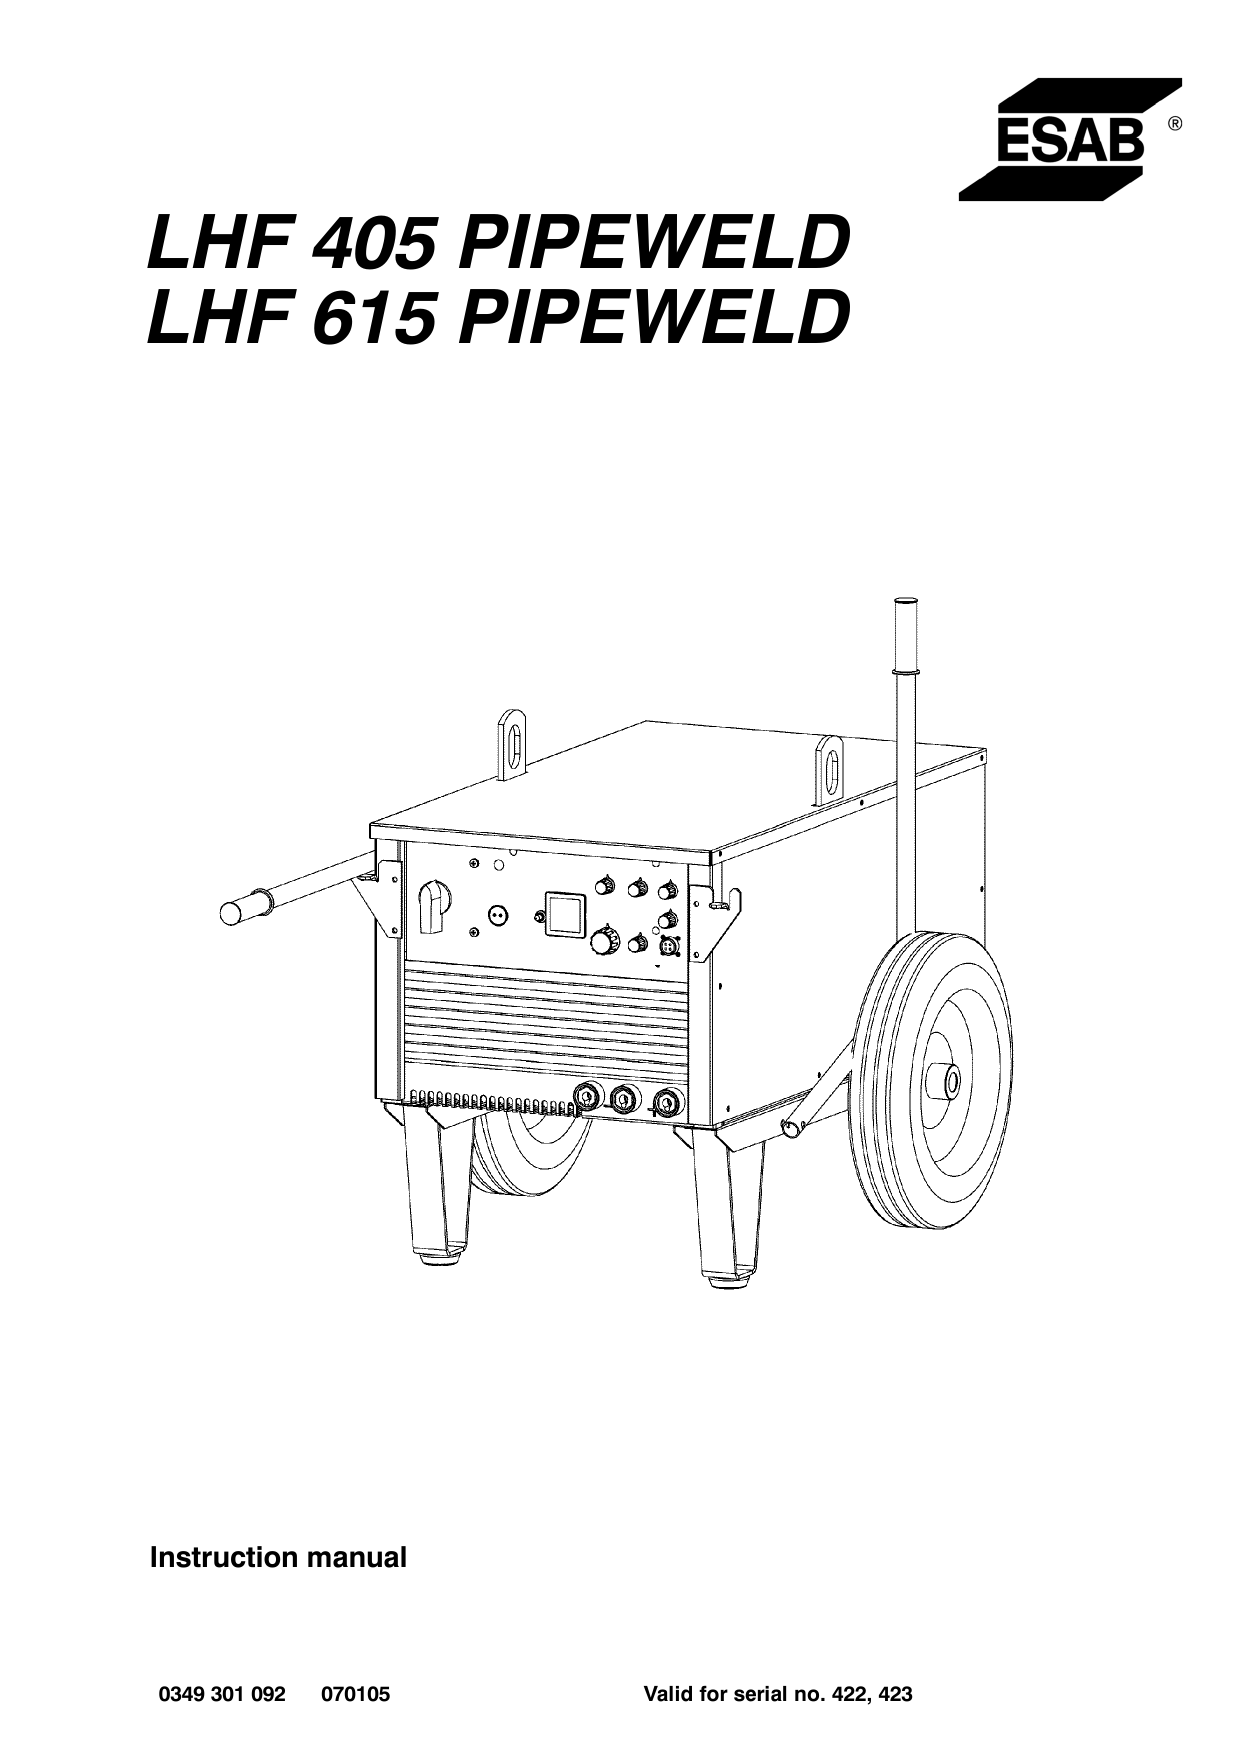 LHF 615 Pipeweld